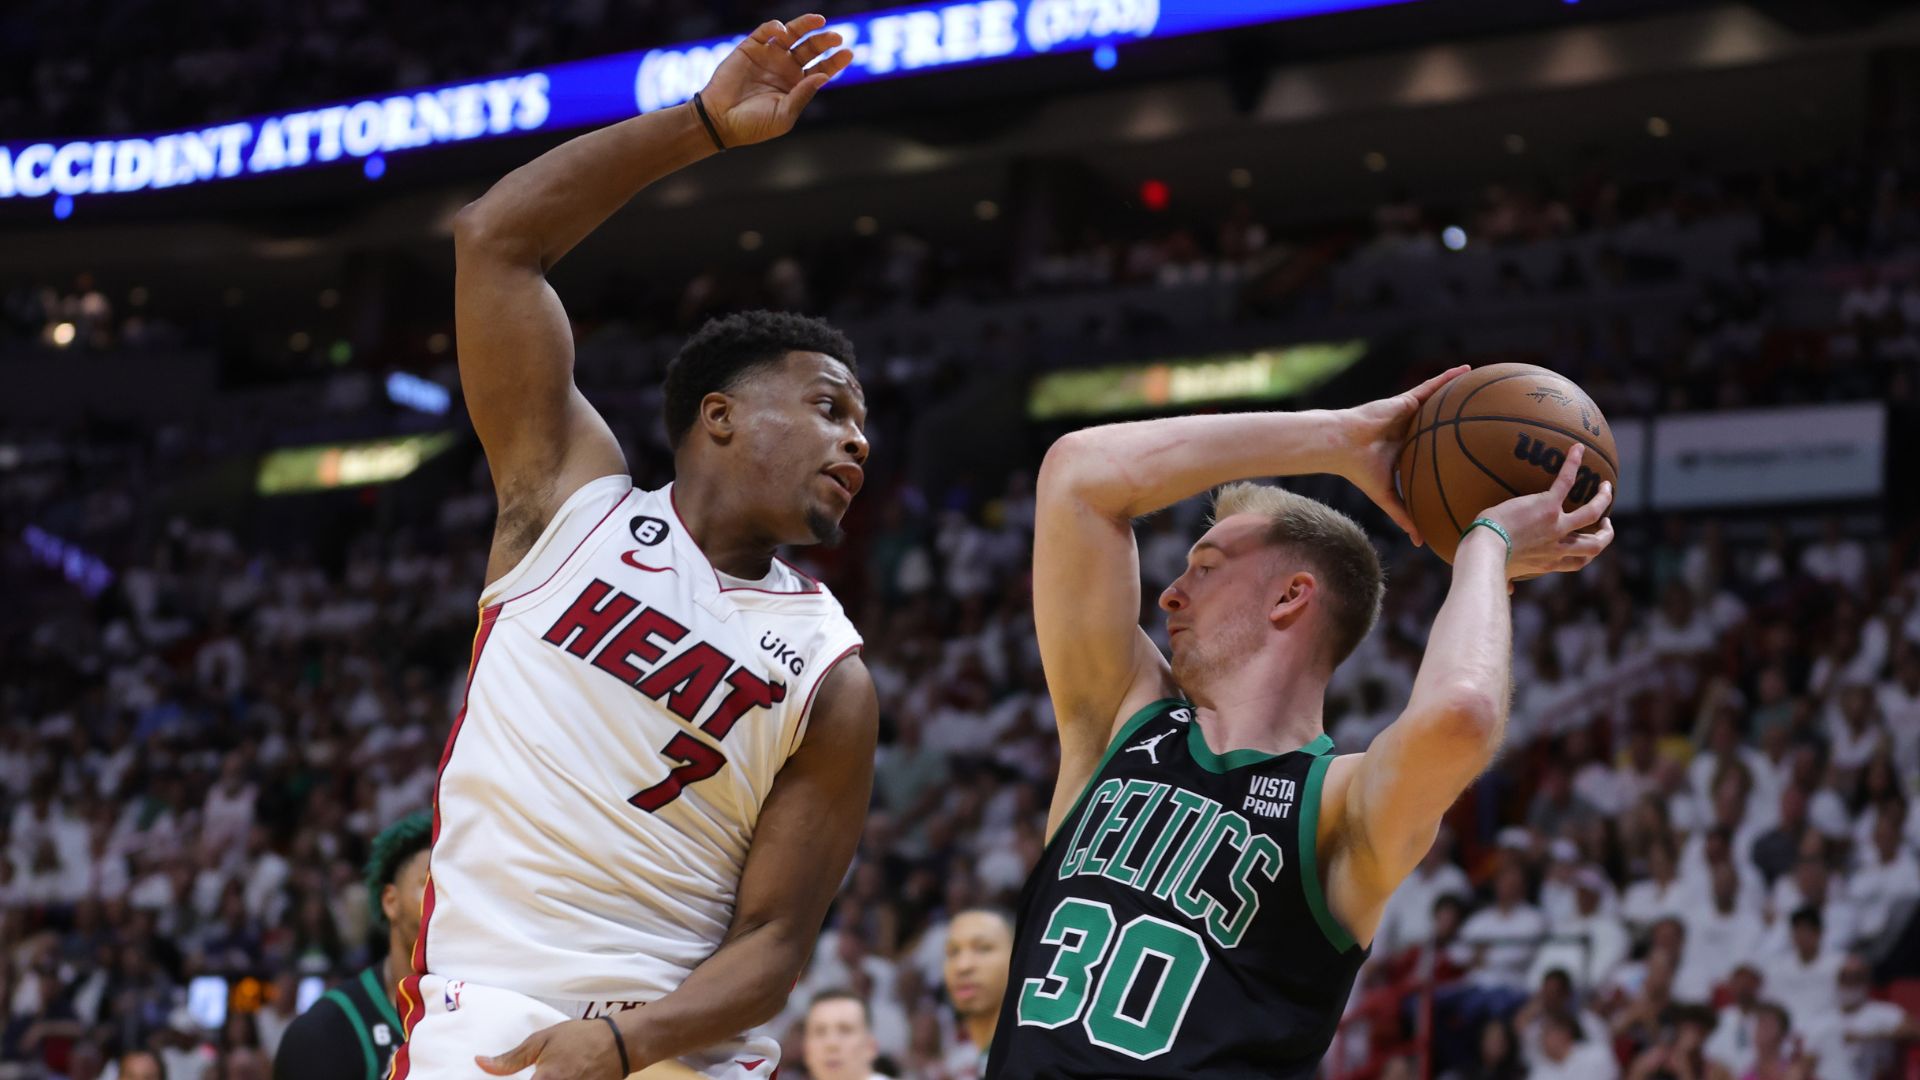 NBA Playoffs: Boston Celtics vence mais uma e preocupa Miami Heat